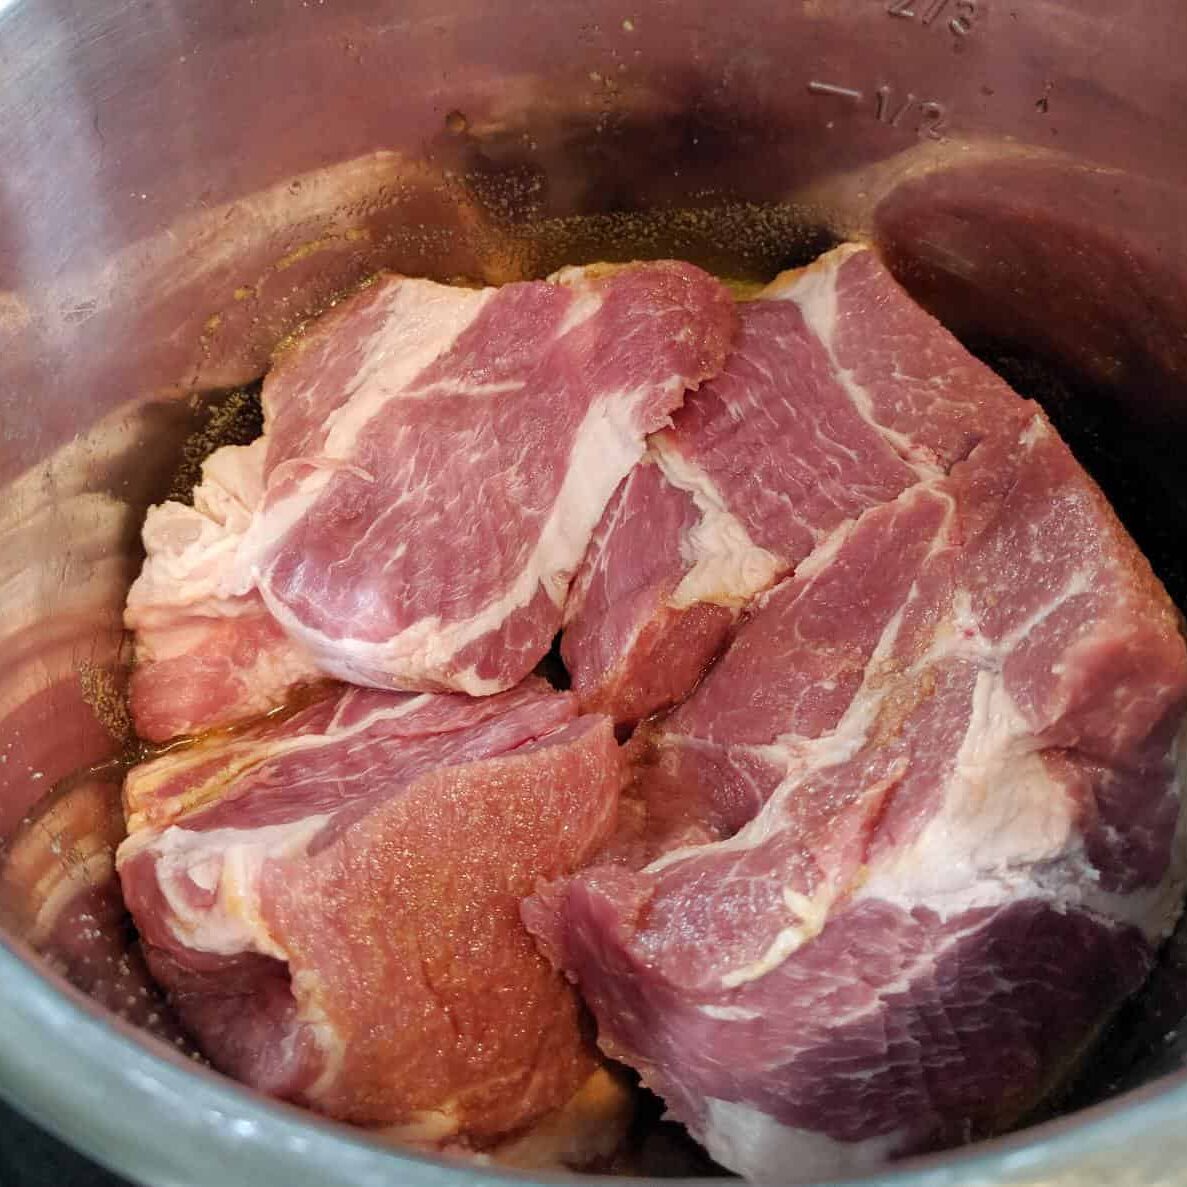 Raw pork butt in the instant pott.